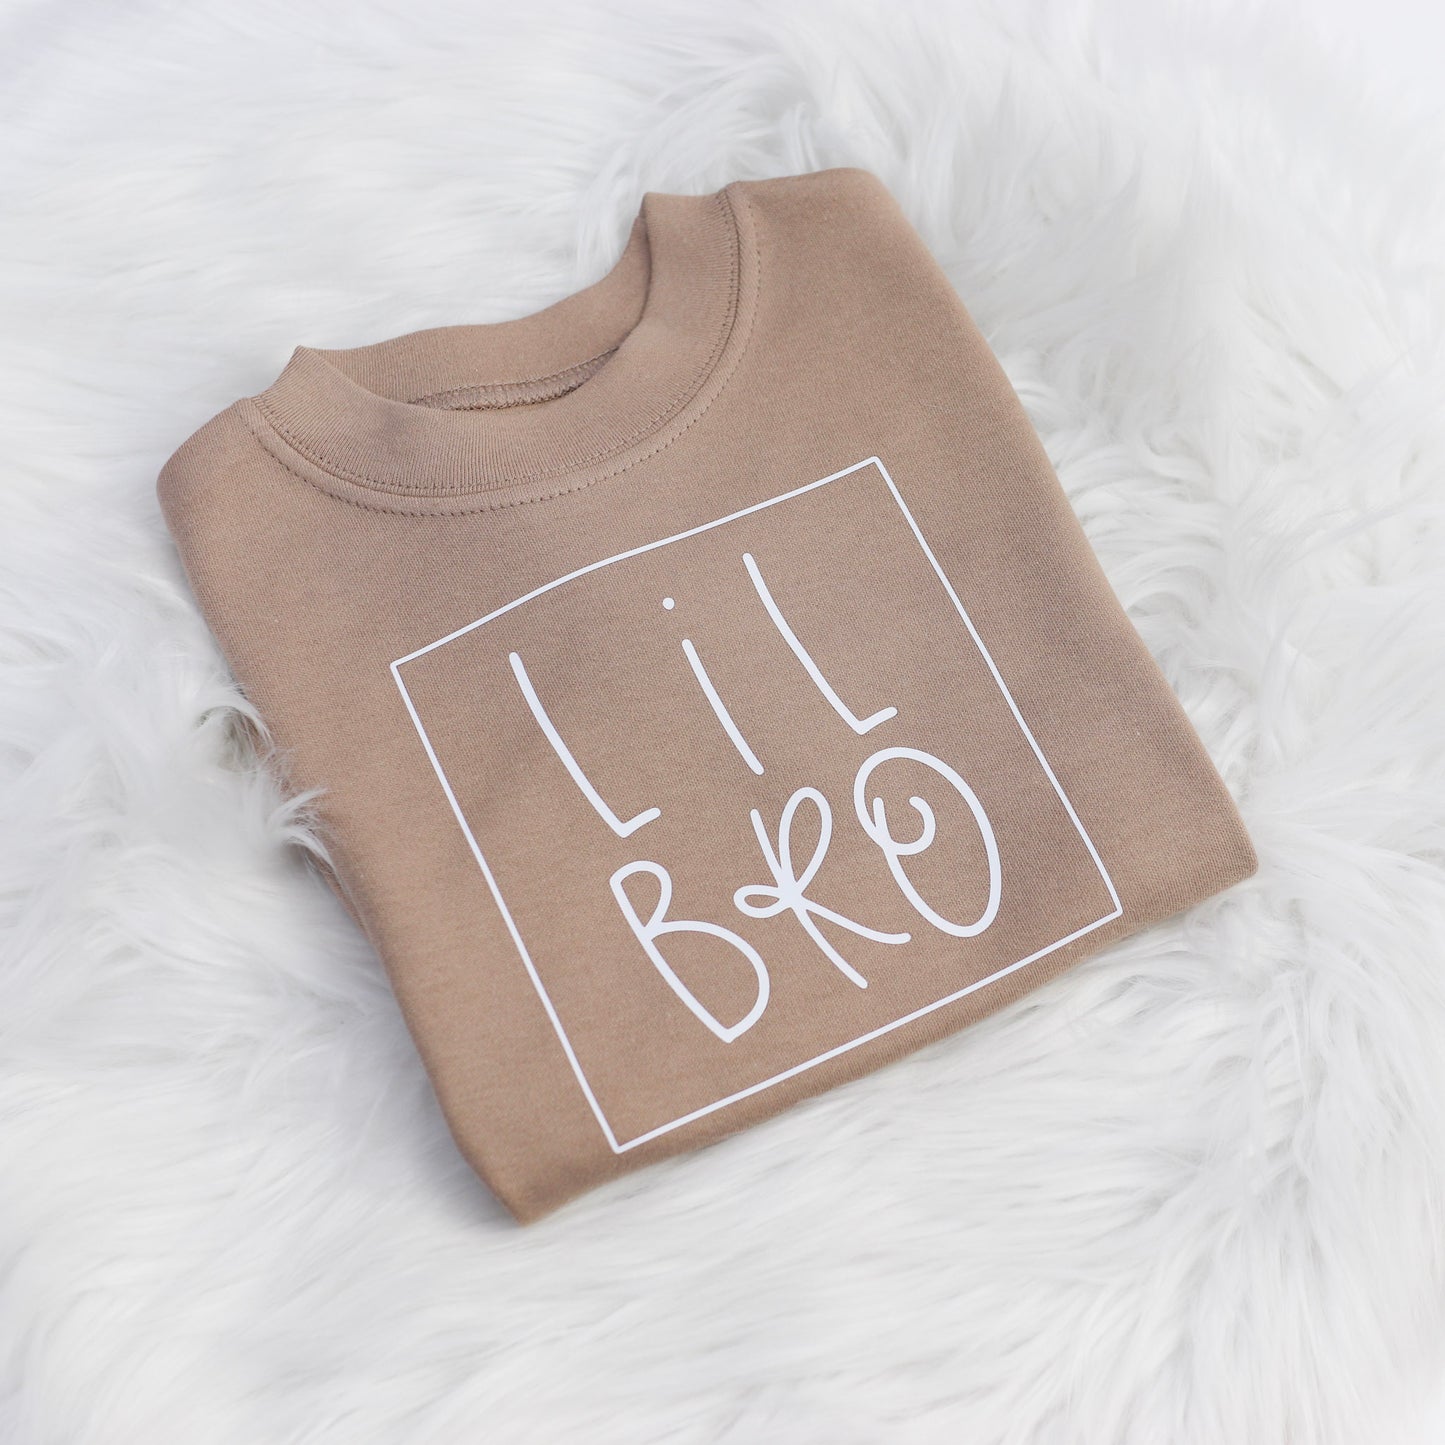 Boxed Lil Bro T-Shirt